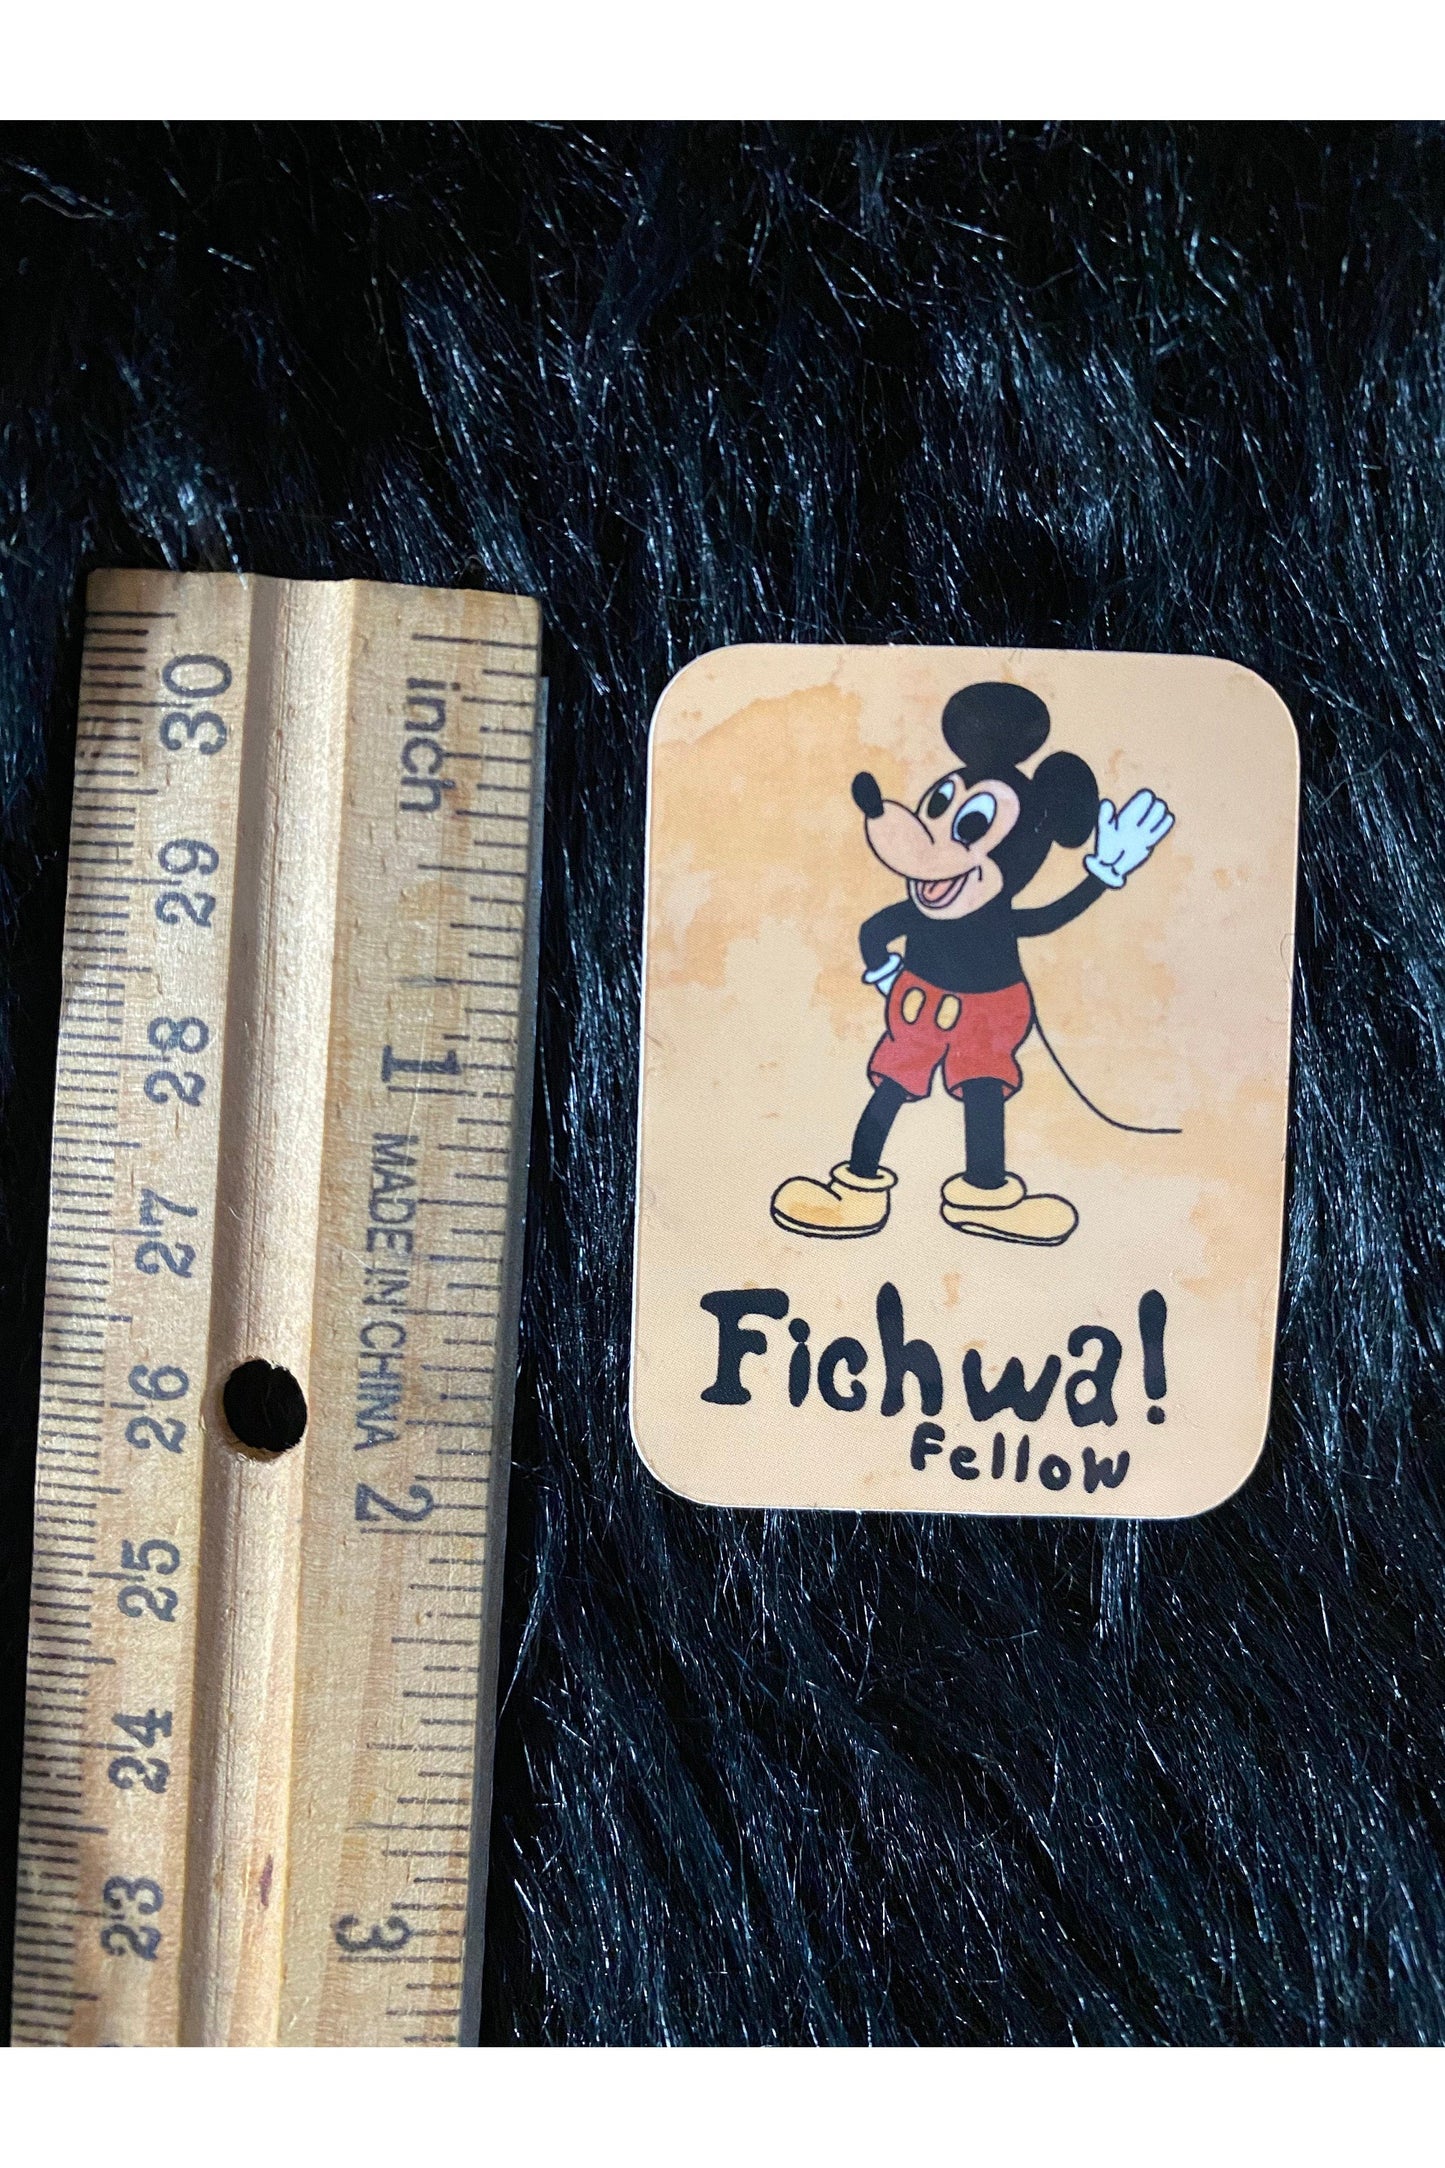 Fichwa! Fellow Wall Animal Kingdom Vinyl Sticker.